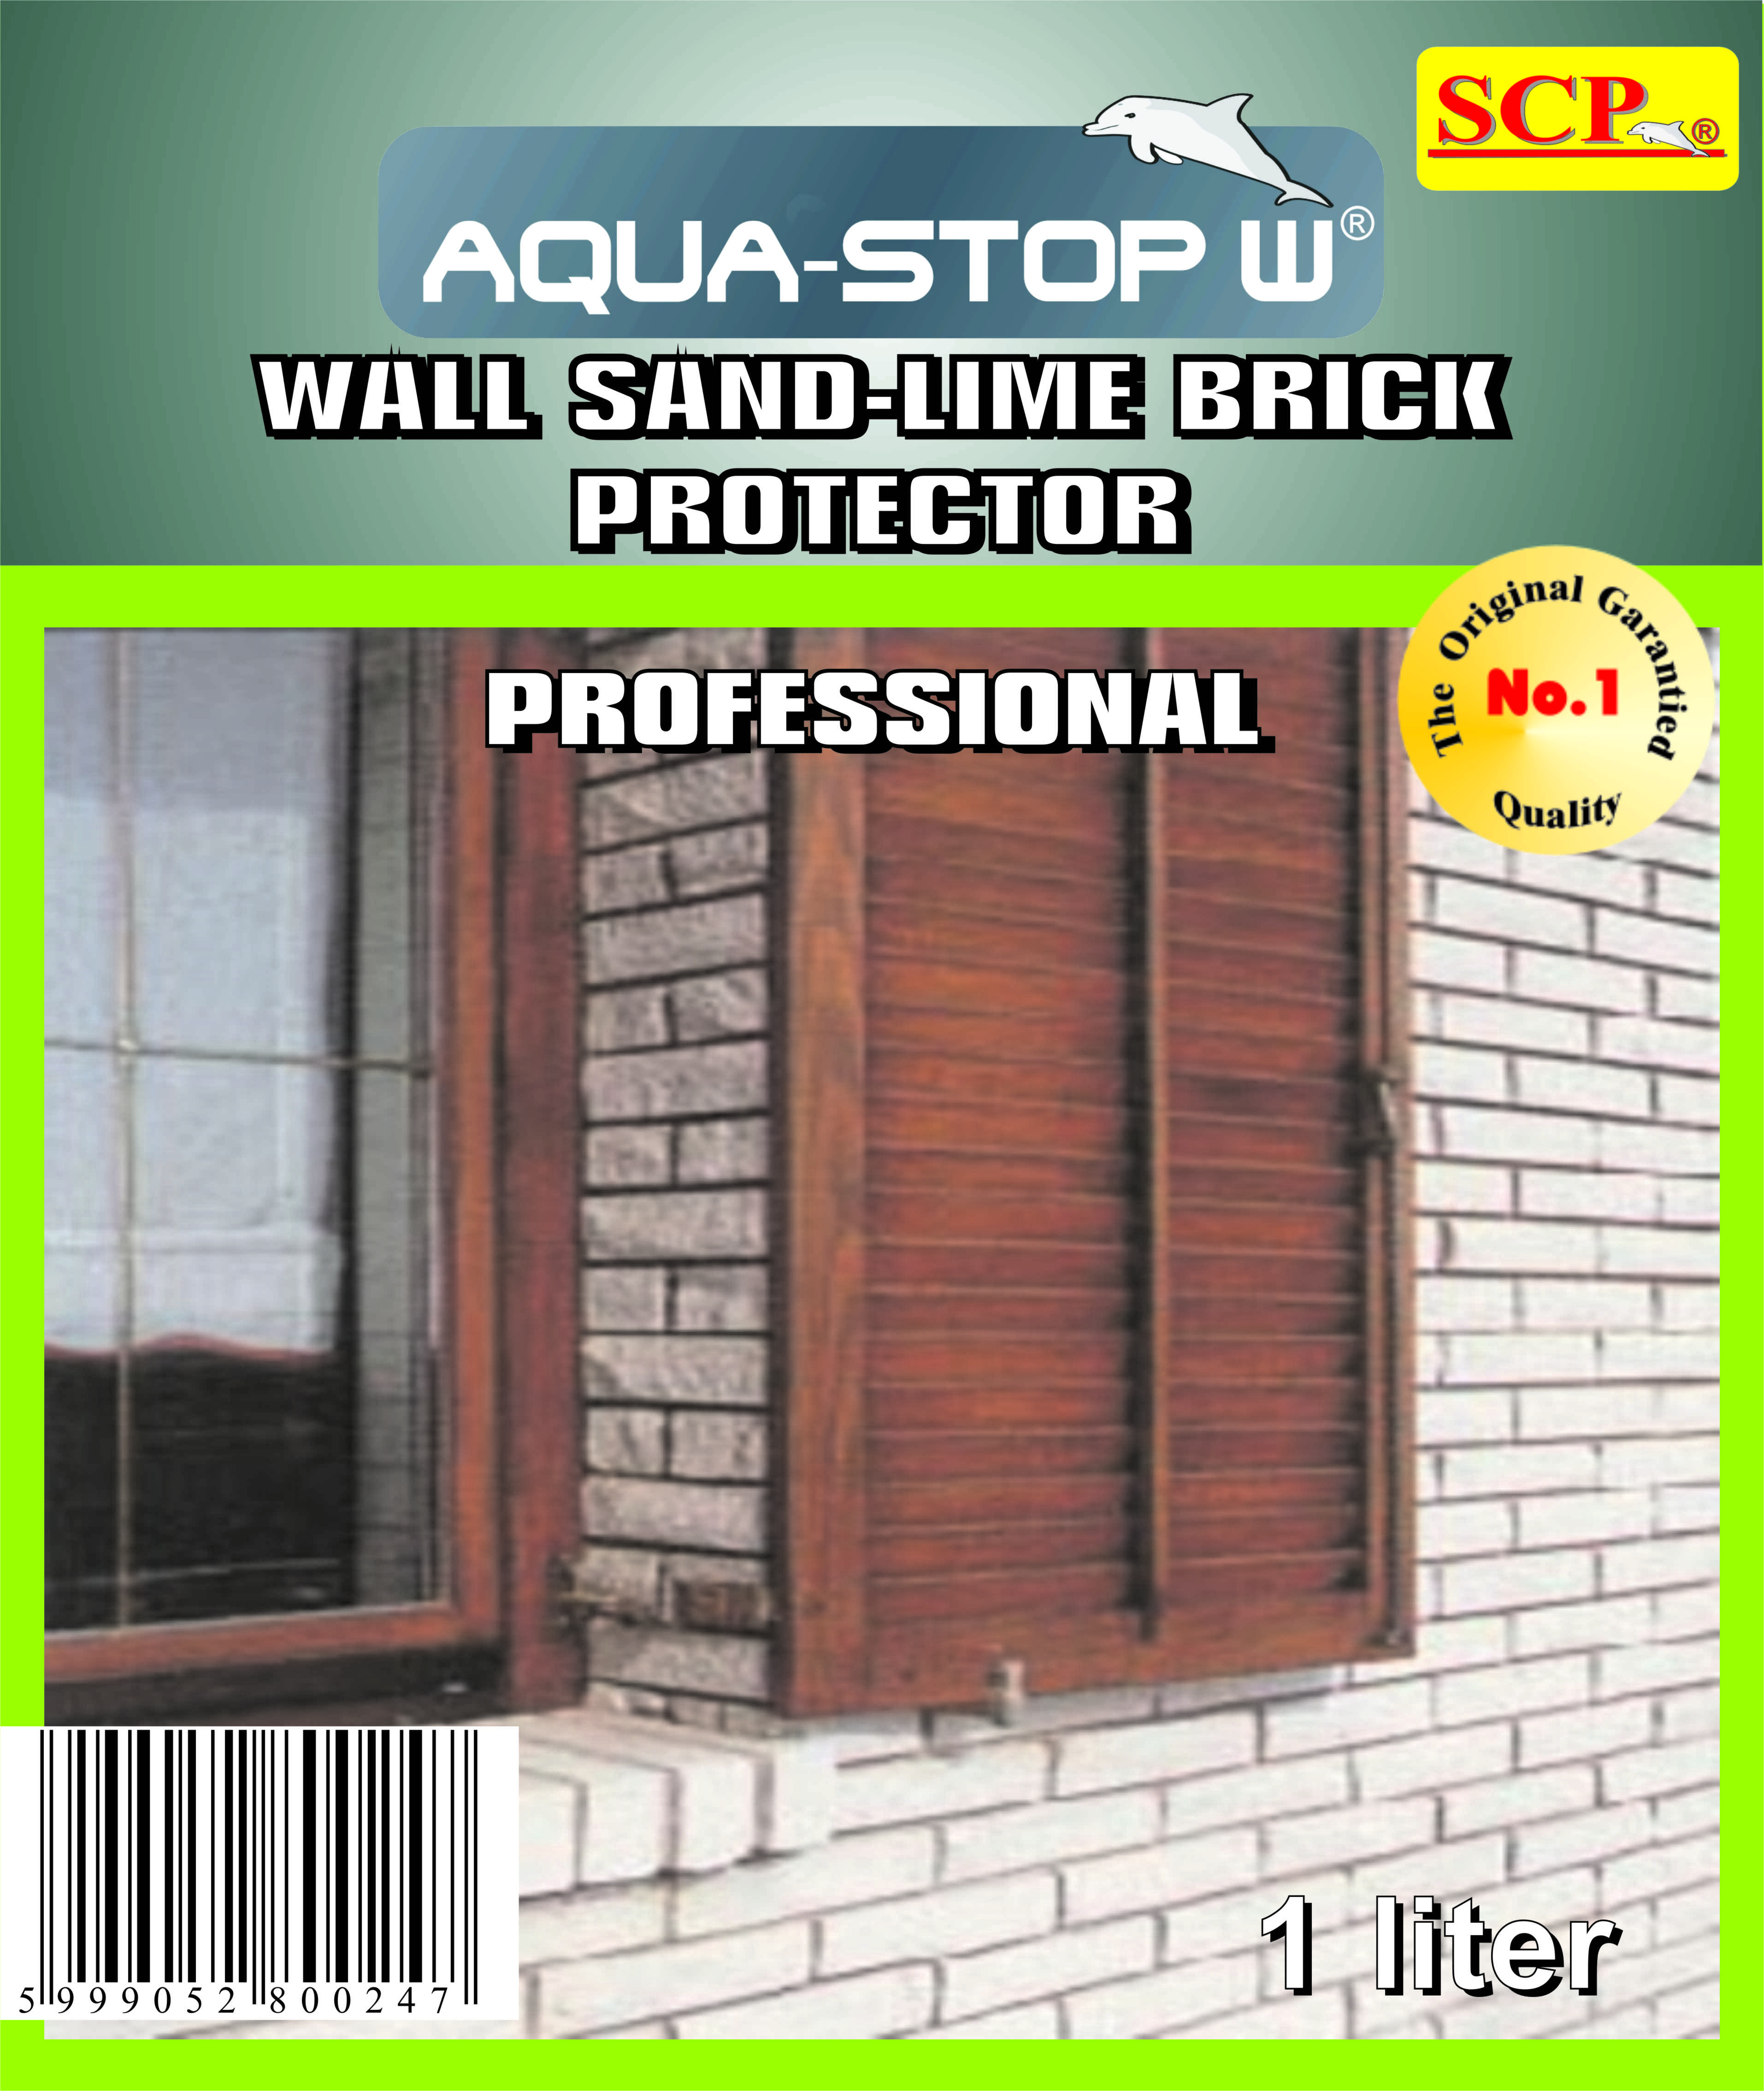 Wall Sand-Lime Brick Protector Professional